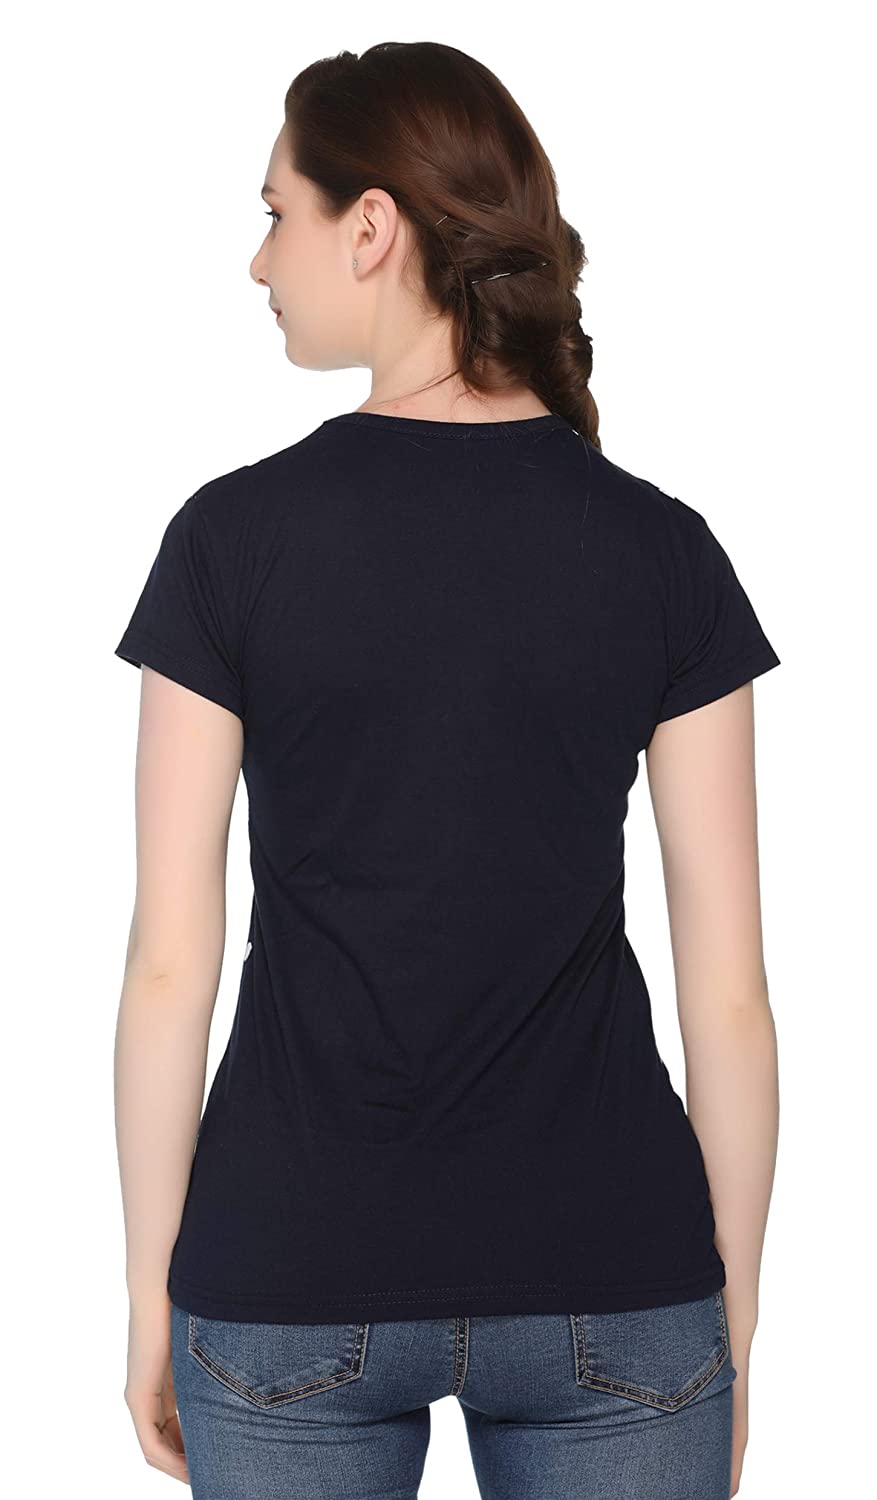 SHAUN 105 Women's T-Shirt (105W1_Pack of 1)